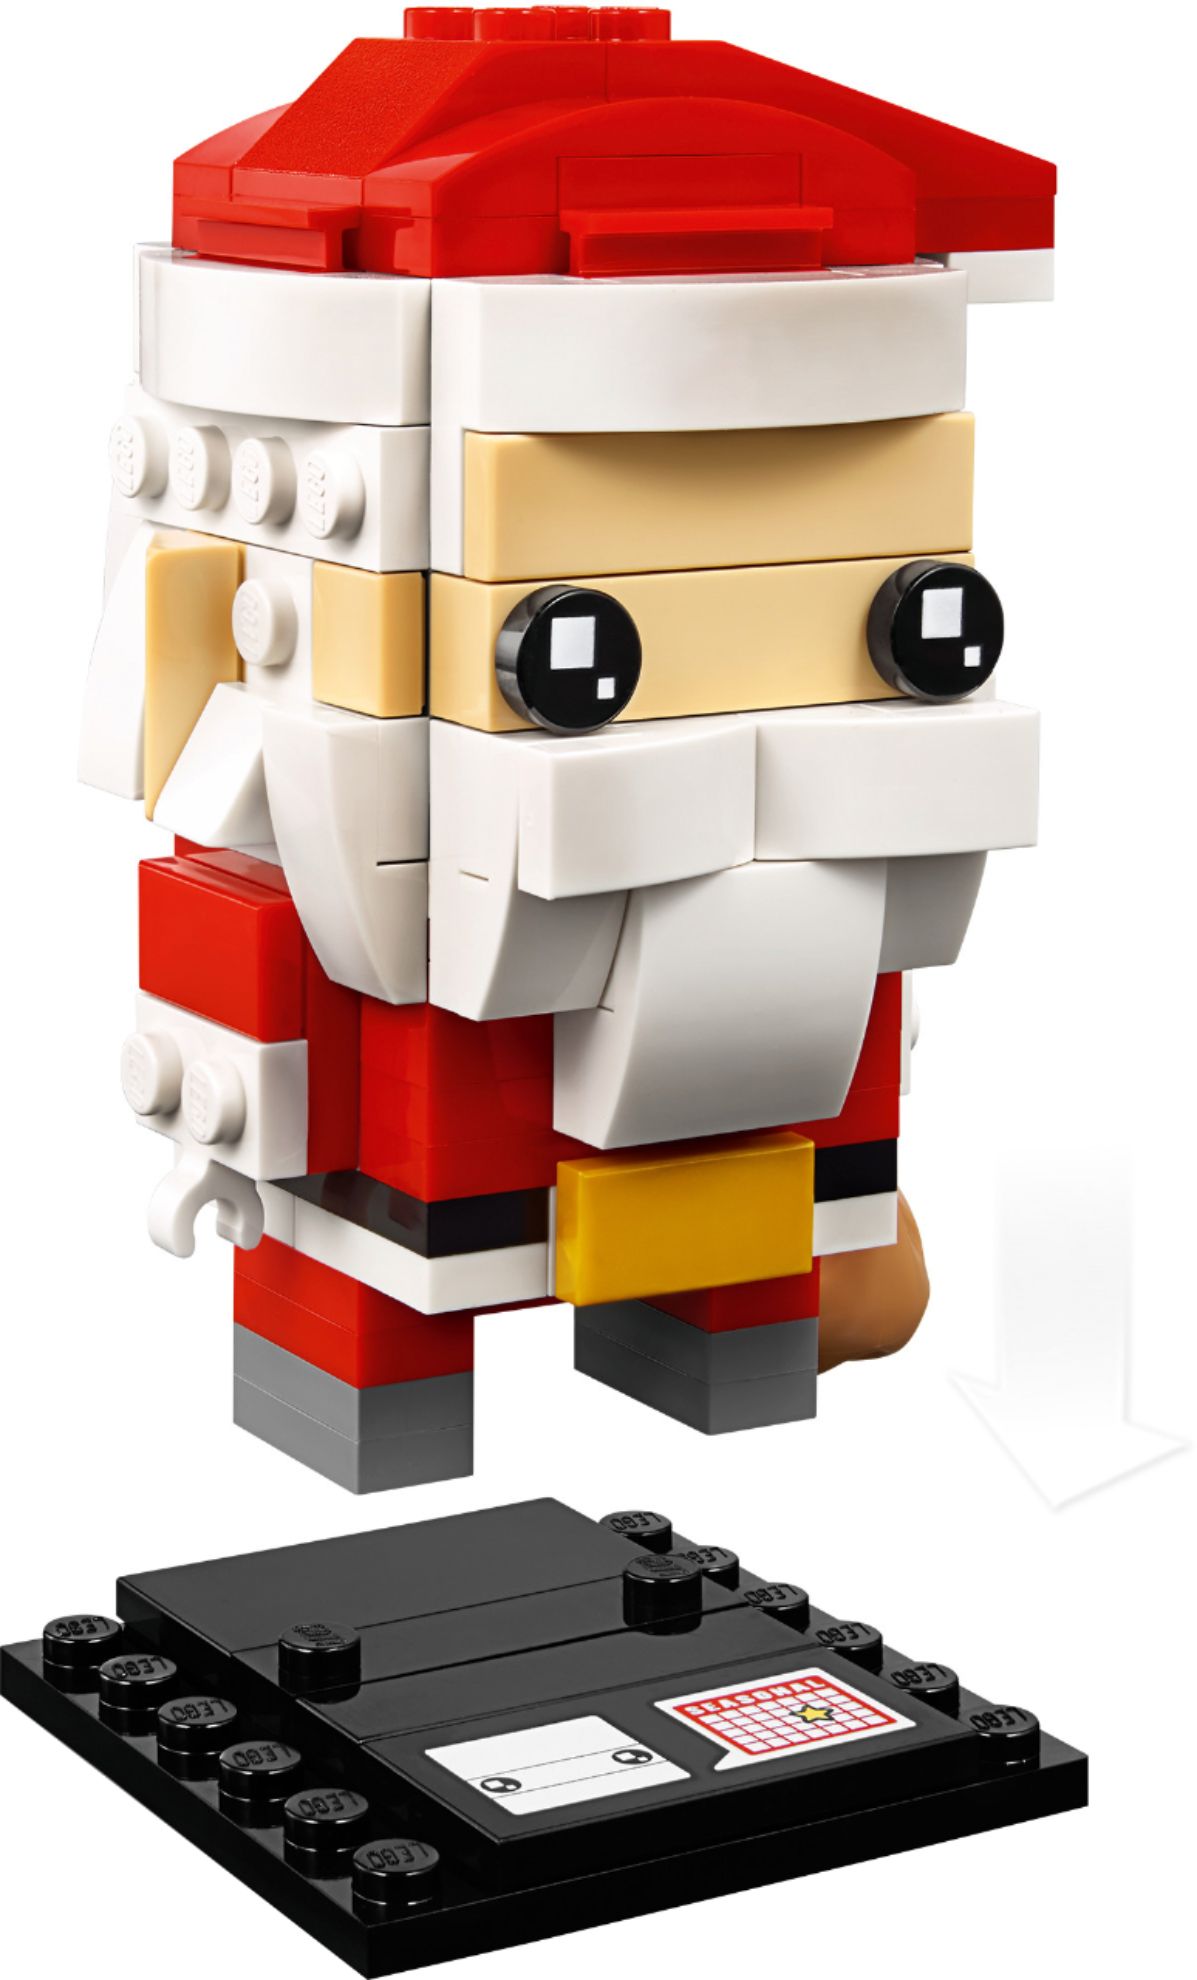 Claus Set 40274 & Mrs Lego Mr for sale online